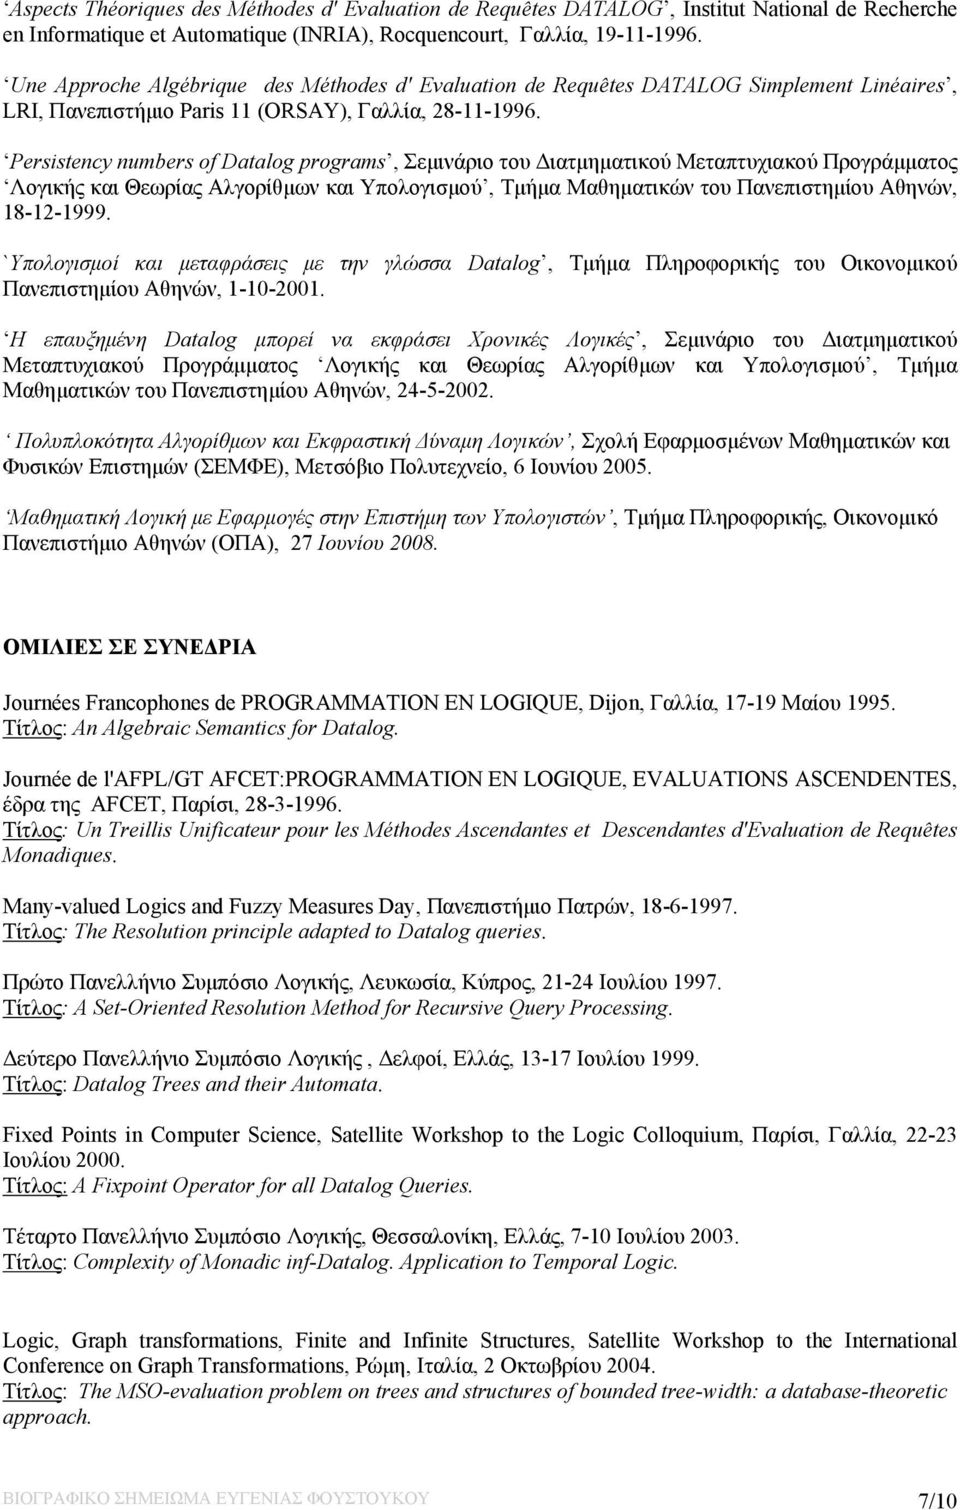 Persistency numbers of Datalog programs, Σεμινάριο του Διατμηματικού Μεταπτυχιακού Προγράμματος Λογικής και Θεωρίας Αλγορίθμων και Υπολογισμού, Τμήμα Μαθηματικών του Πανεπιστημίου Αθηνών, 18-12-1999.